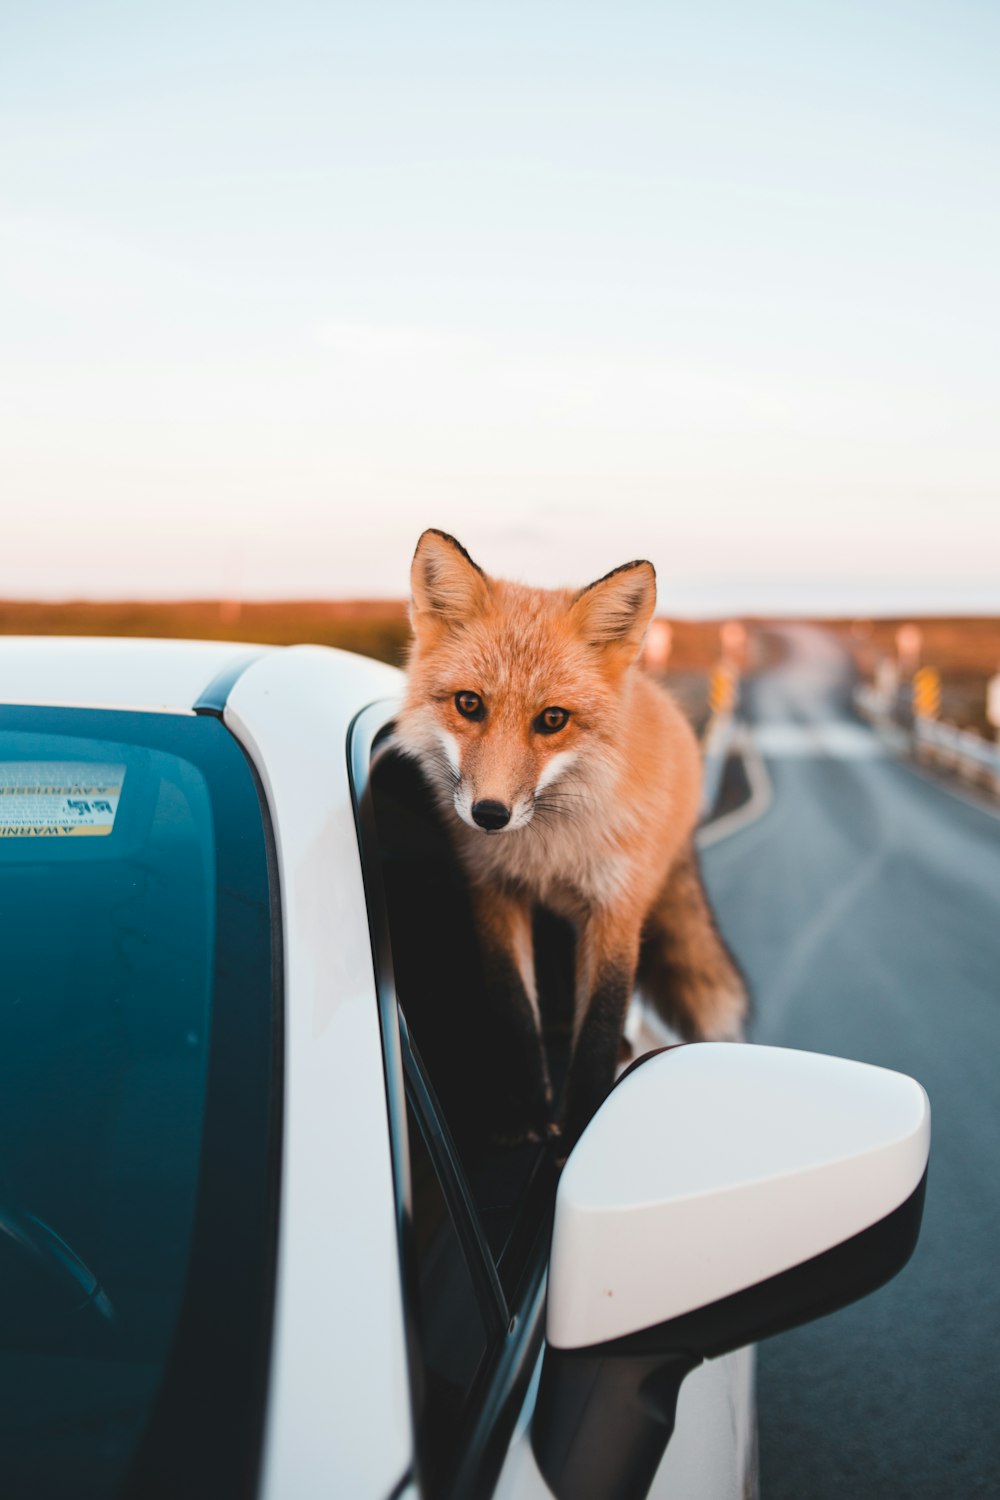 a fox sitting on the side of a car window